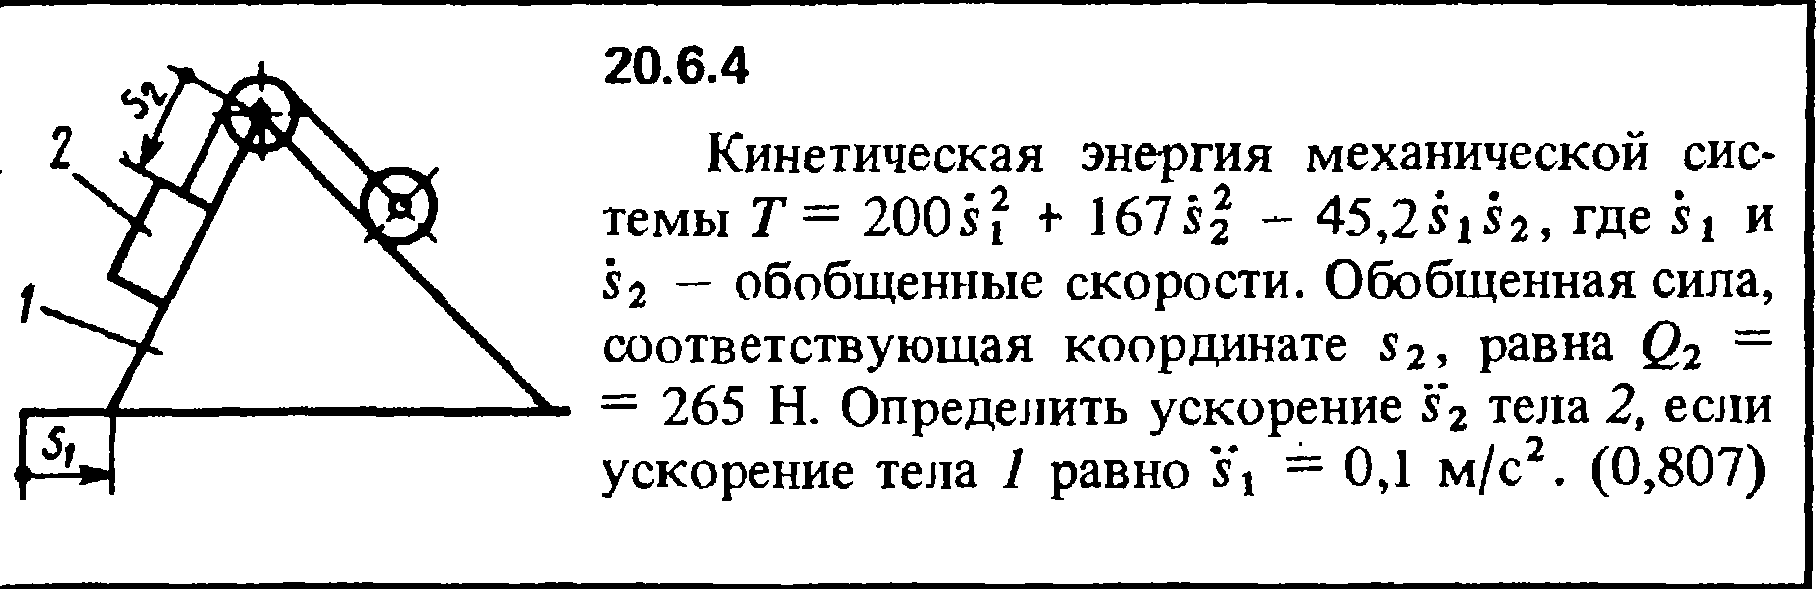 Решение 20.6.4 из сборника (решебника) Кепе О.Е. 1989